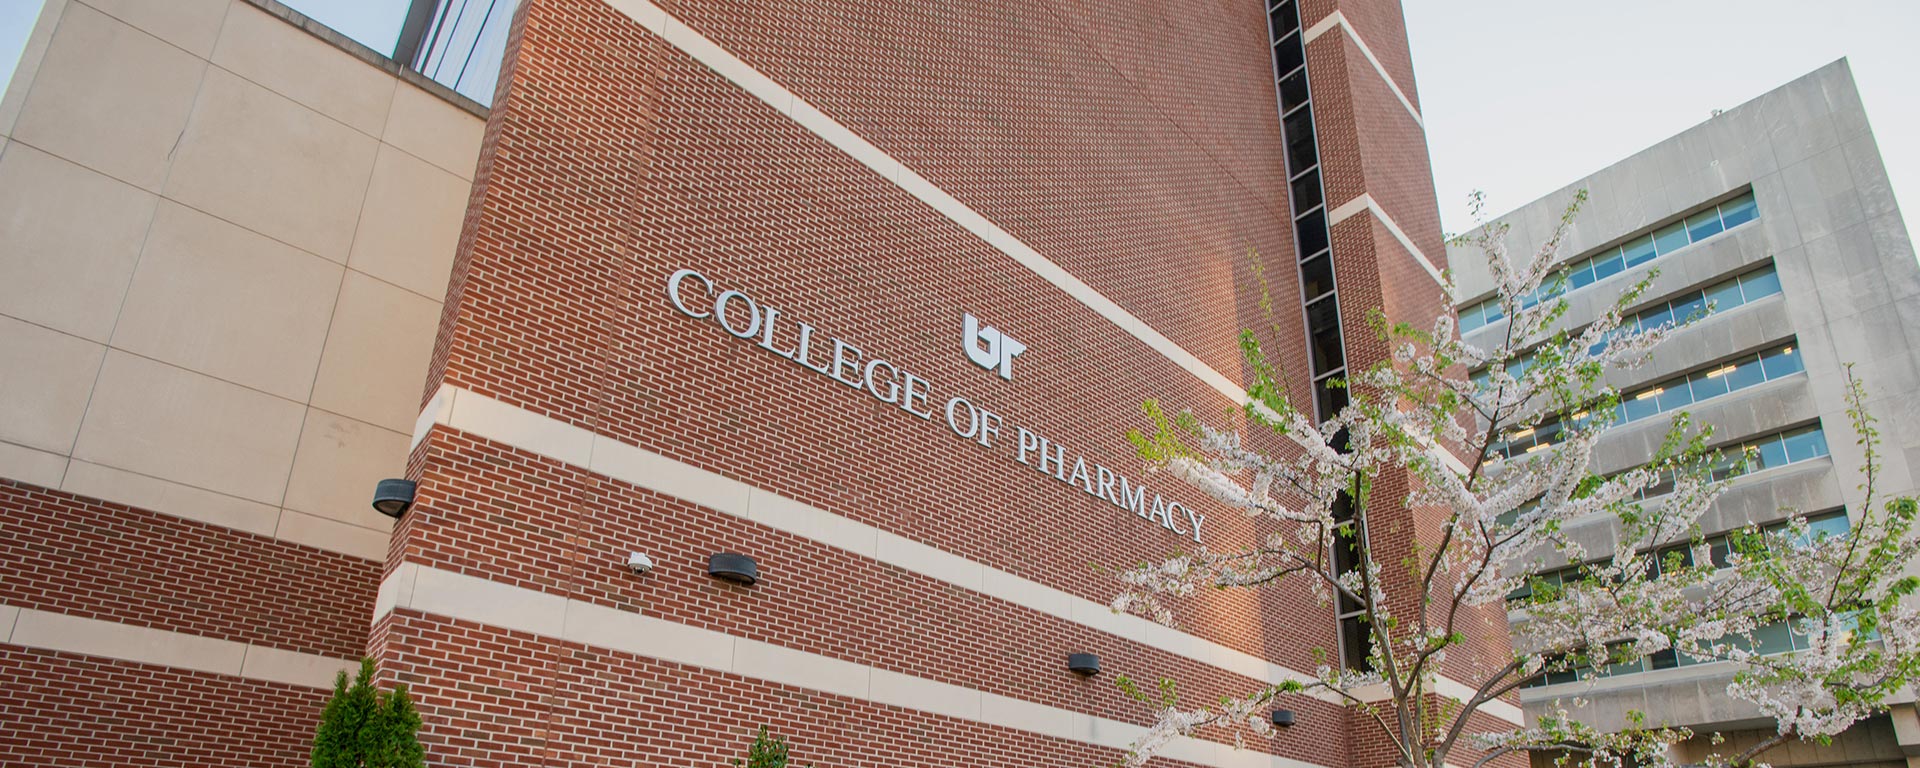 UTHSC College of Pharmacy